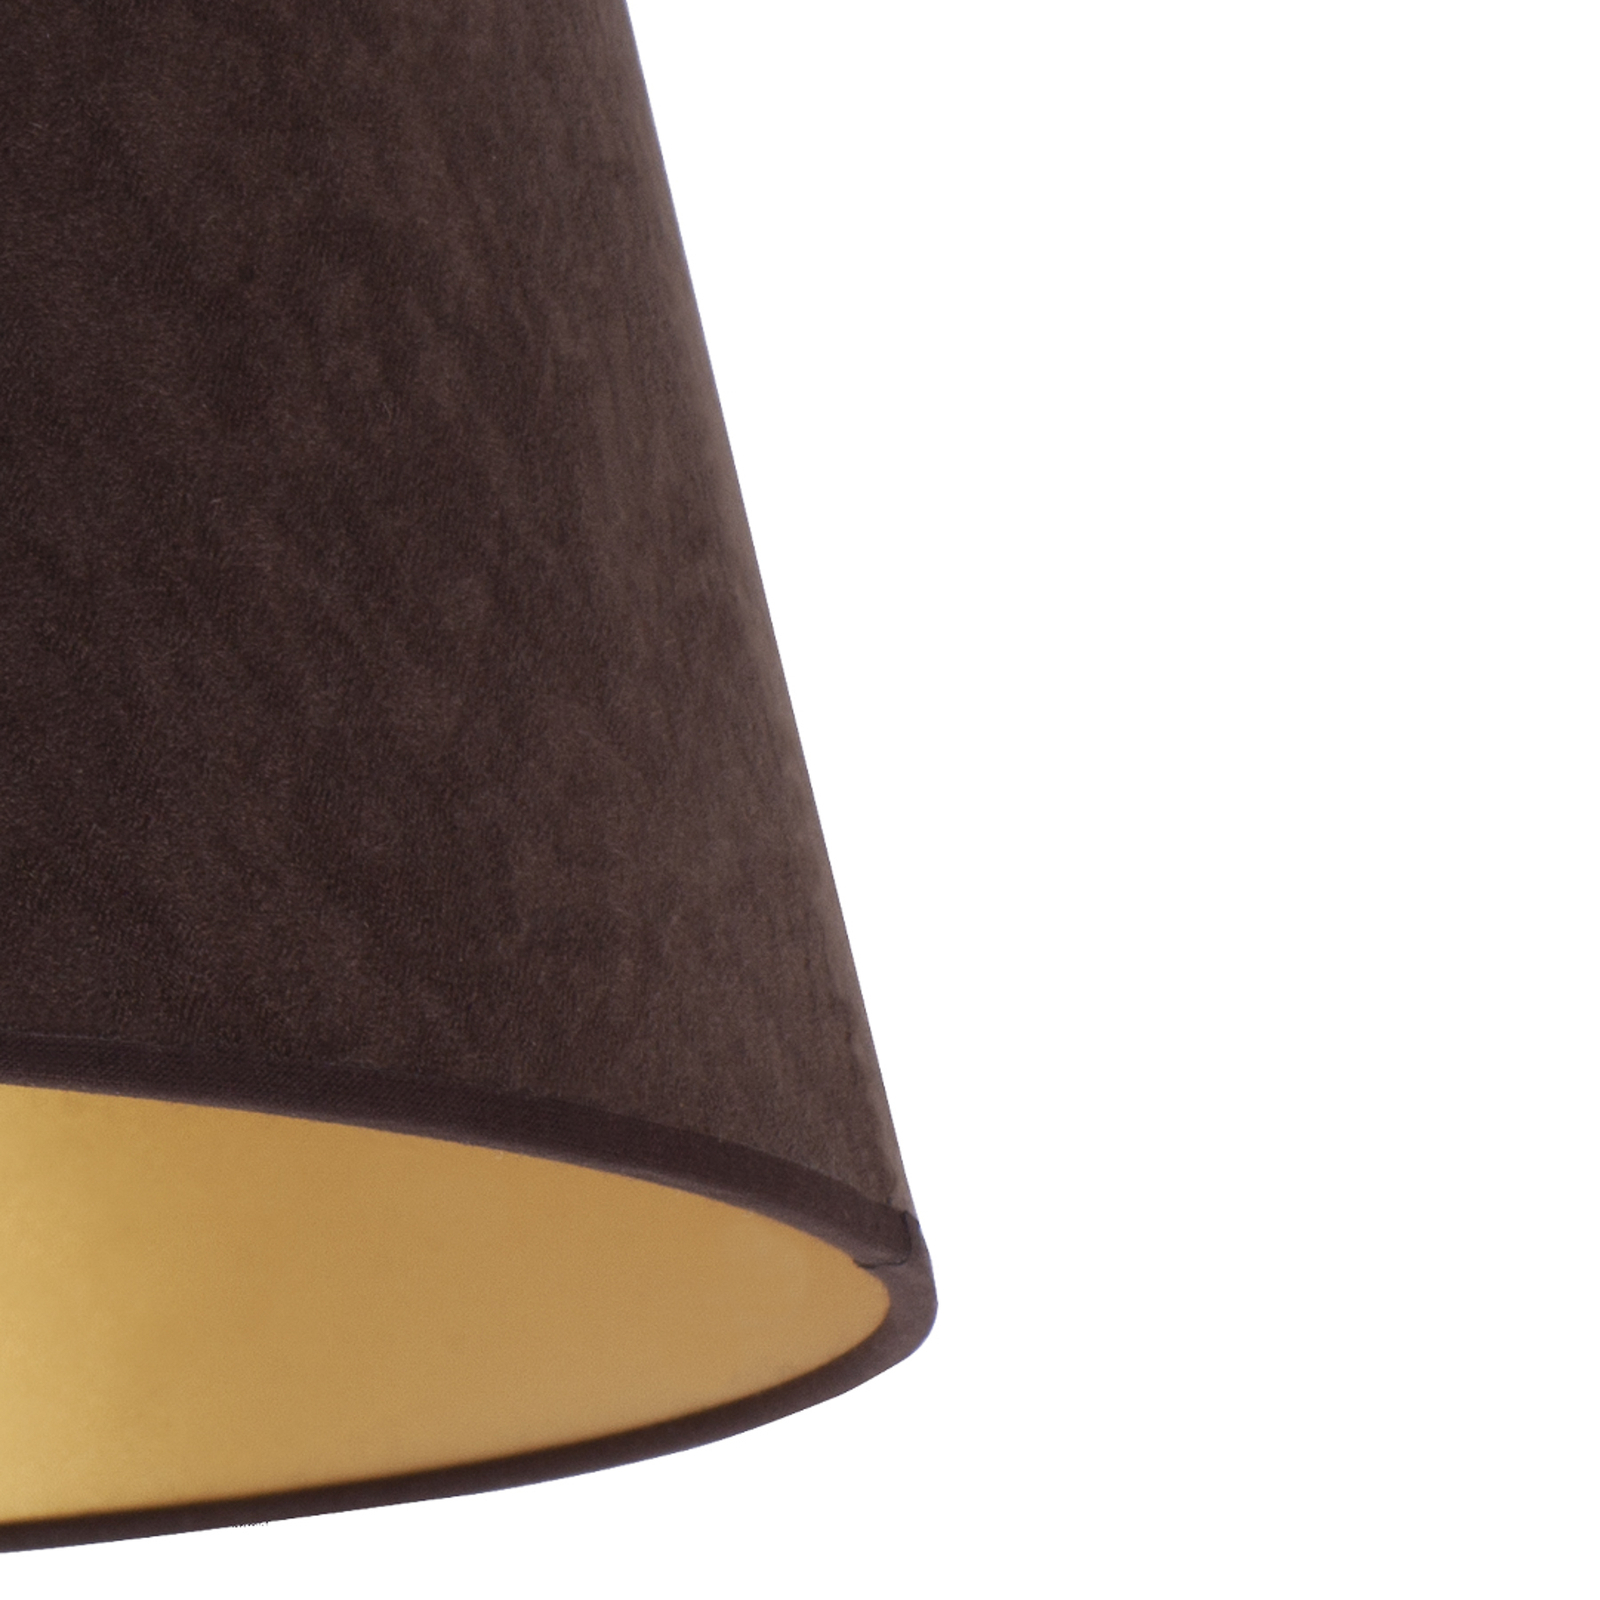 Cone lámpaernyő 18 cm magas, barna/arany